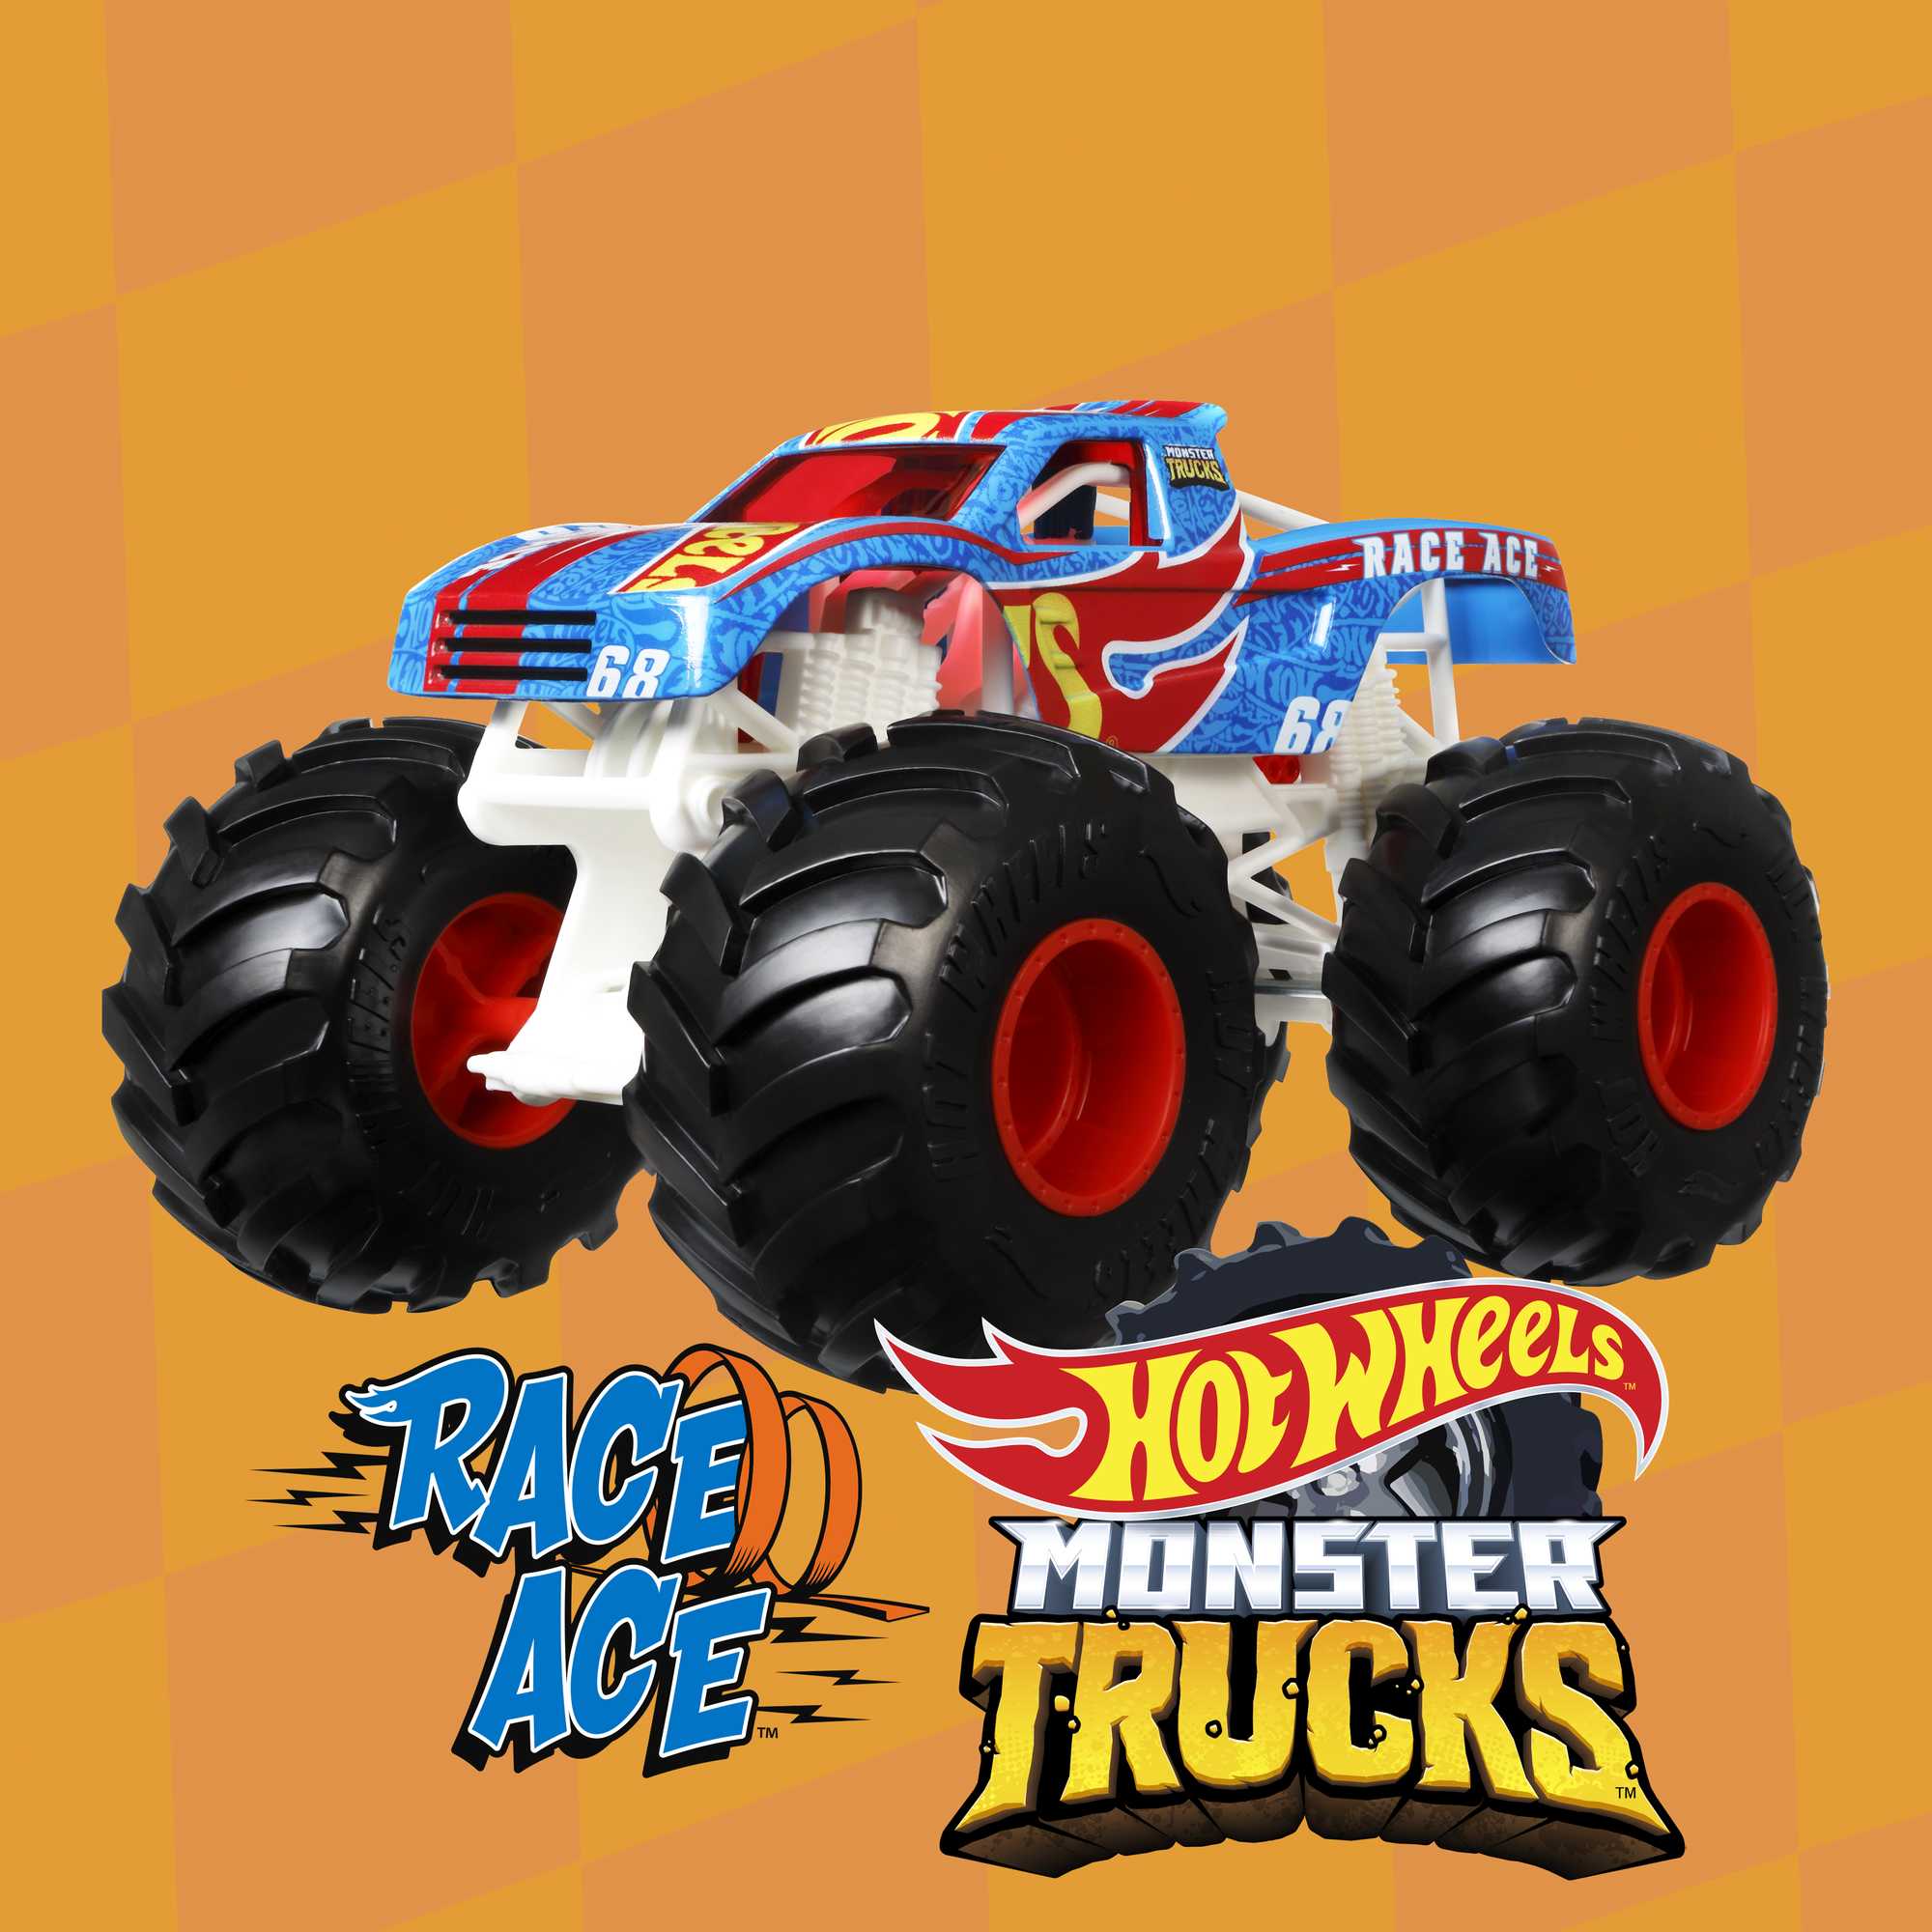 Hot Wheels Monster Trucks Tiger Shark, 1:24 Scale die cast